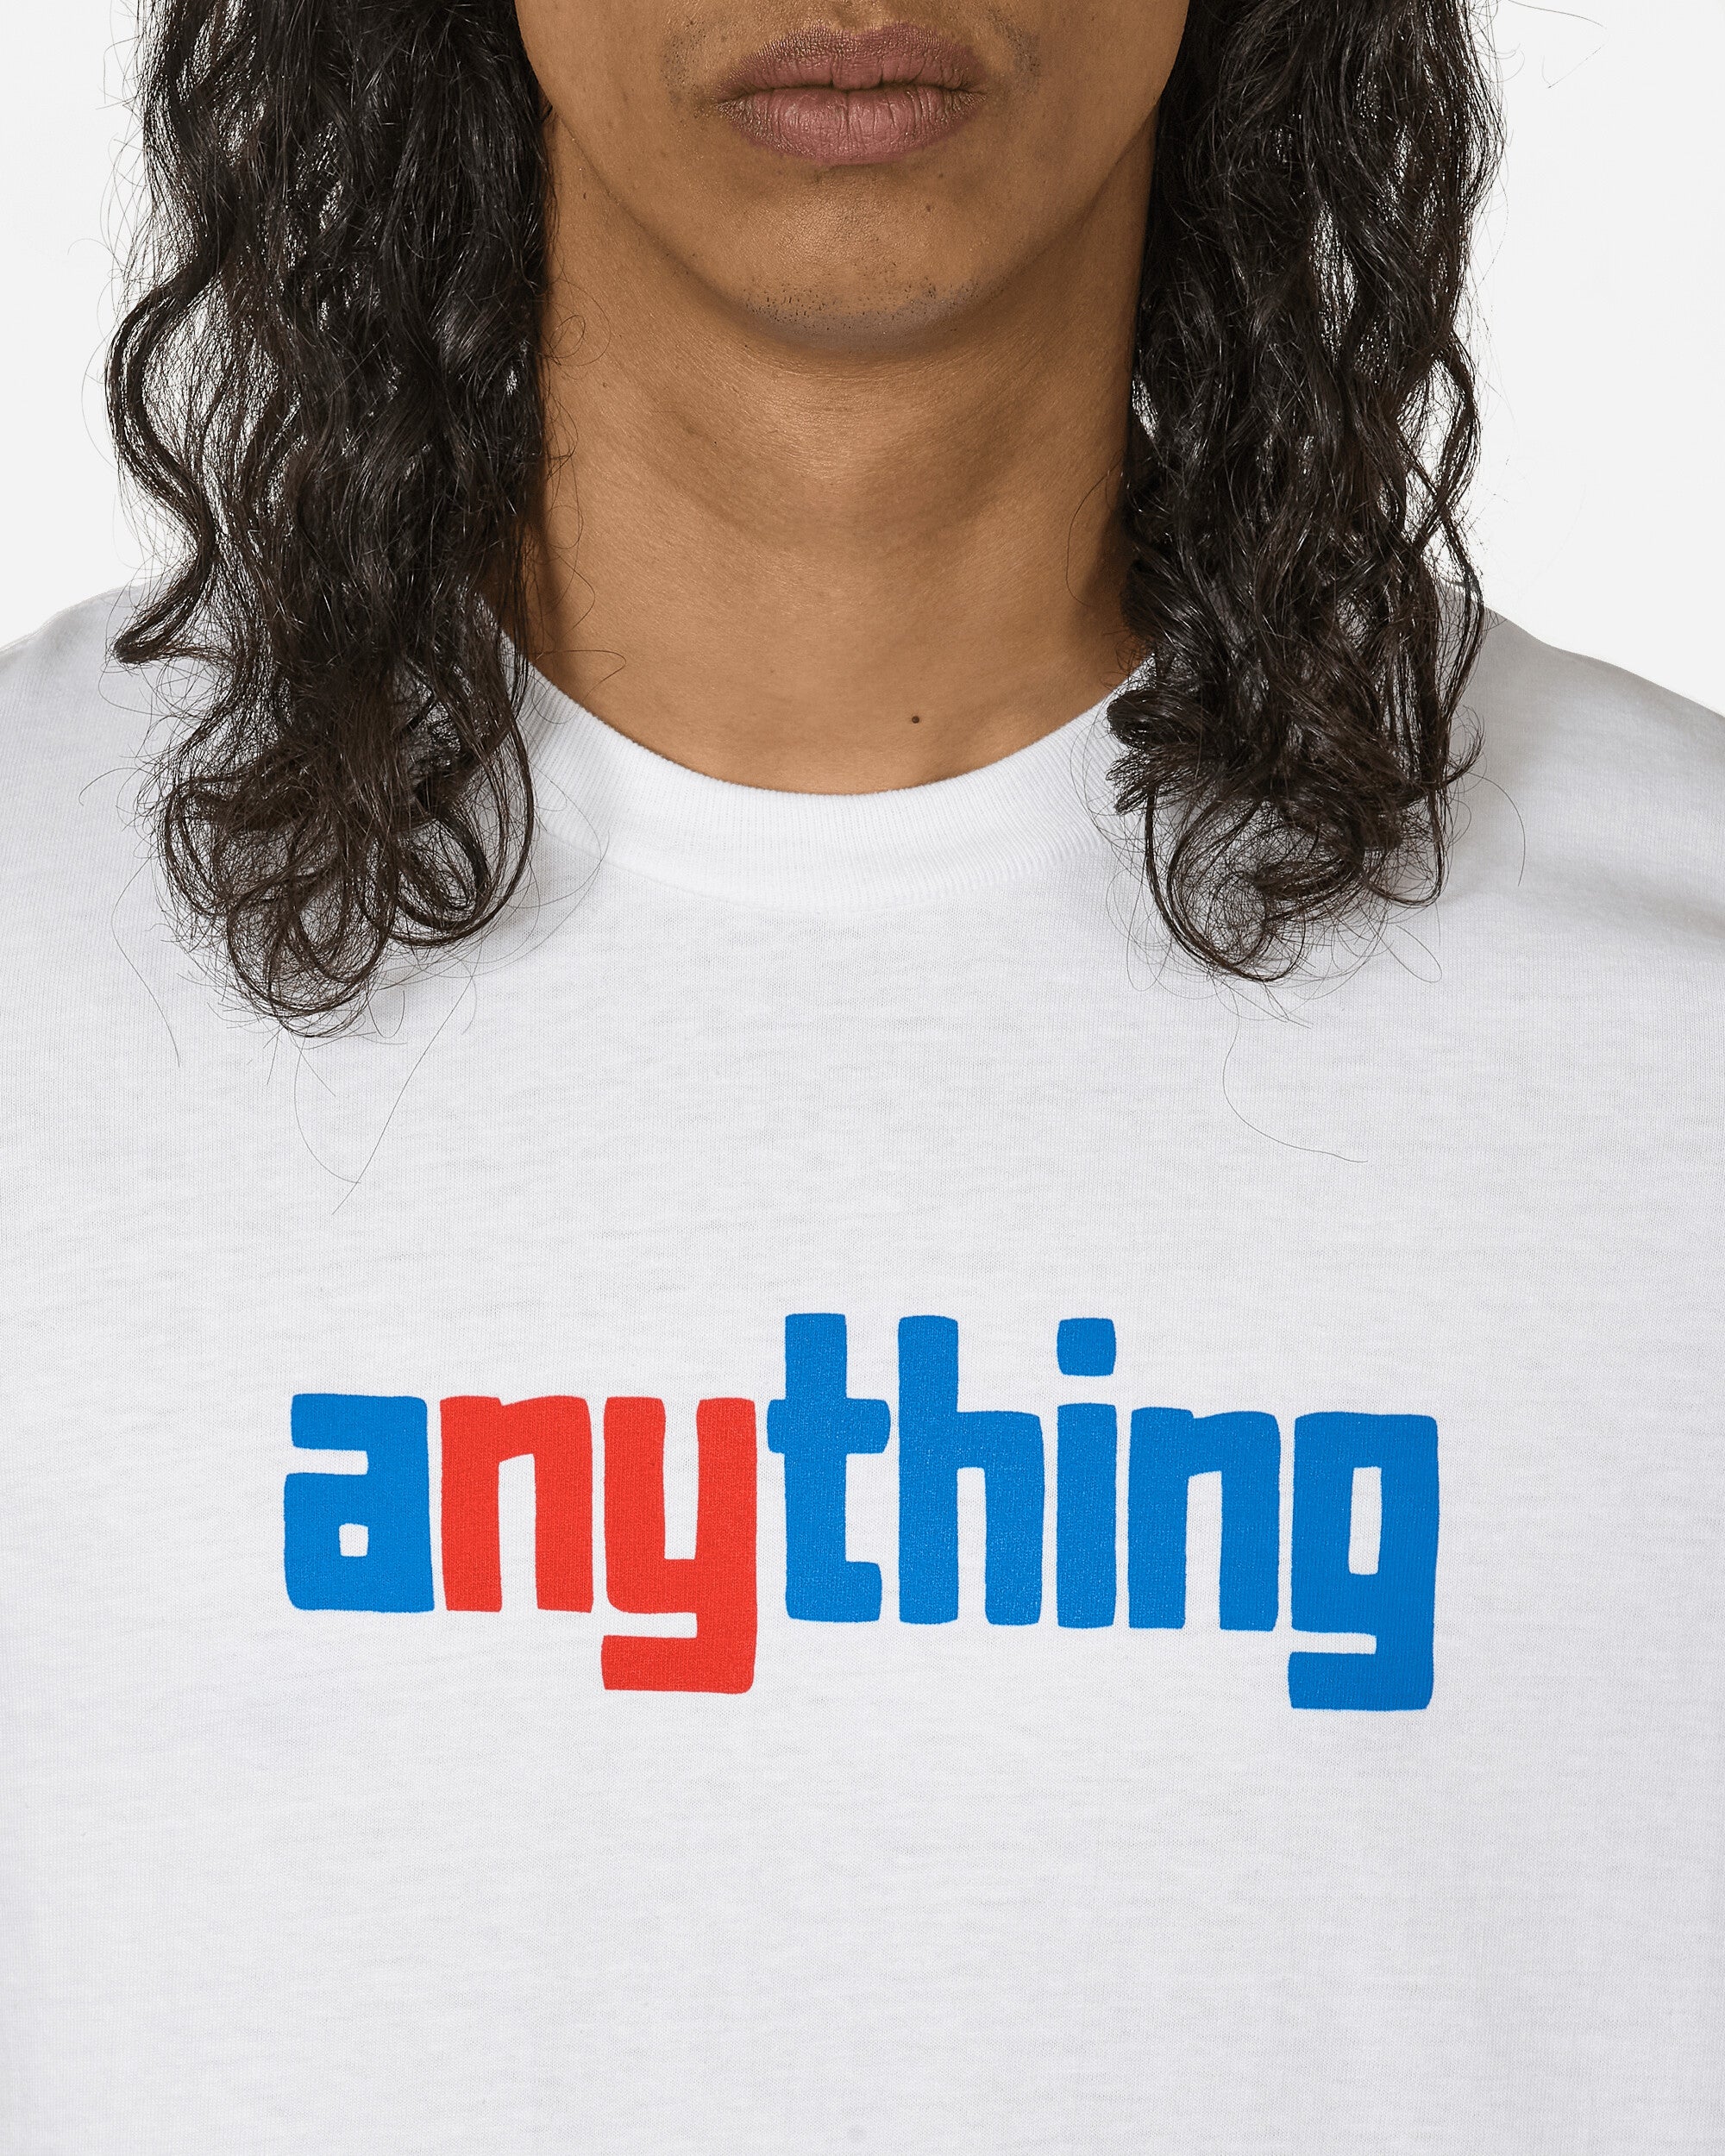 aNYthing Speeball Logo T-Shirt White T-Shirts Shortsleeve ANY-064 WH